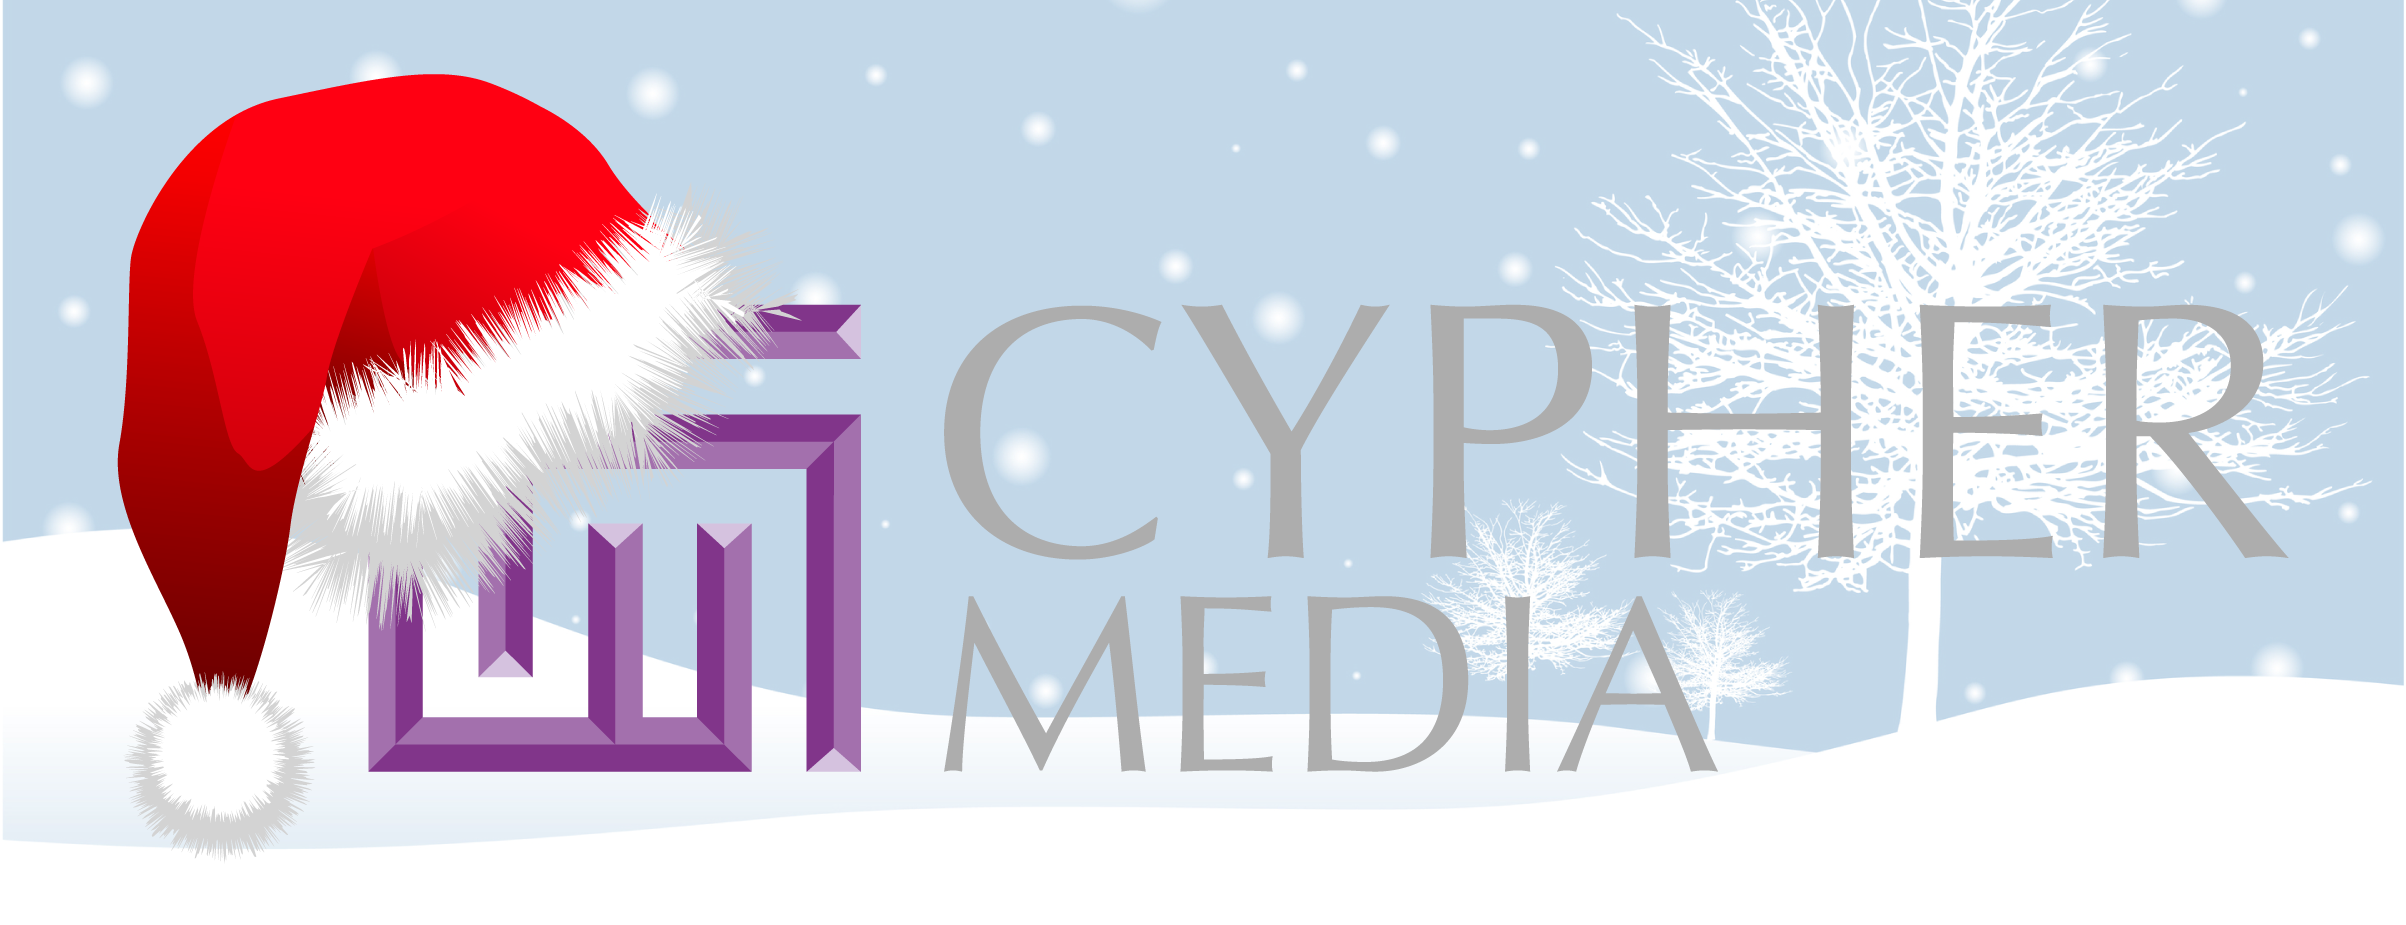 Seasons greetings from Cypher Media 